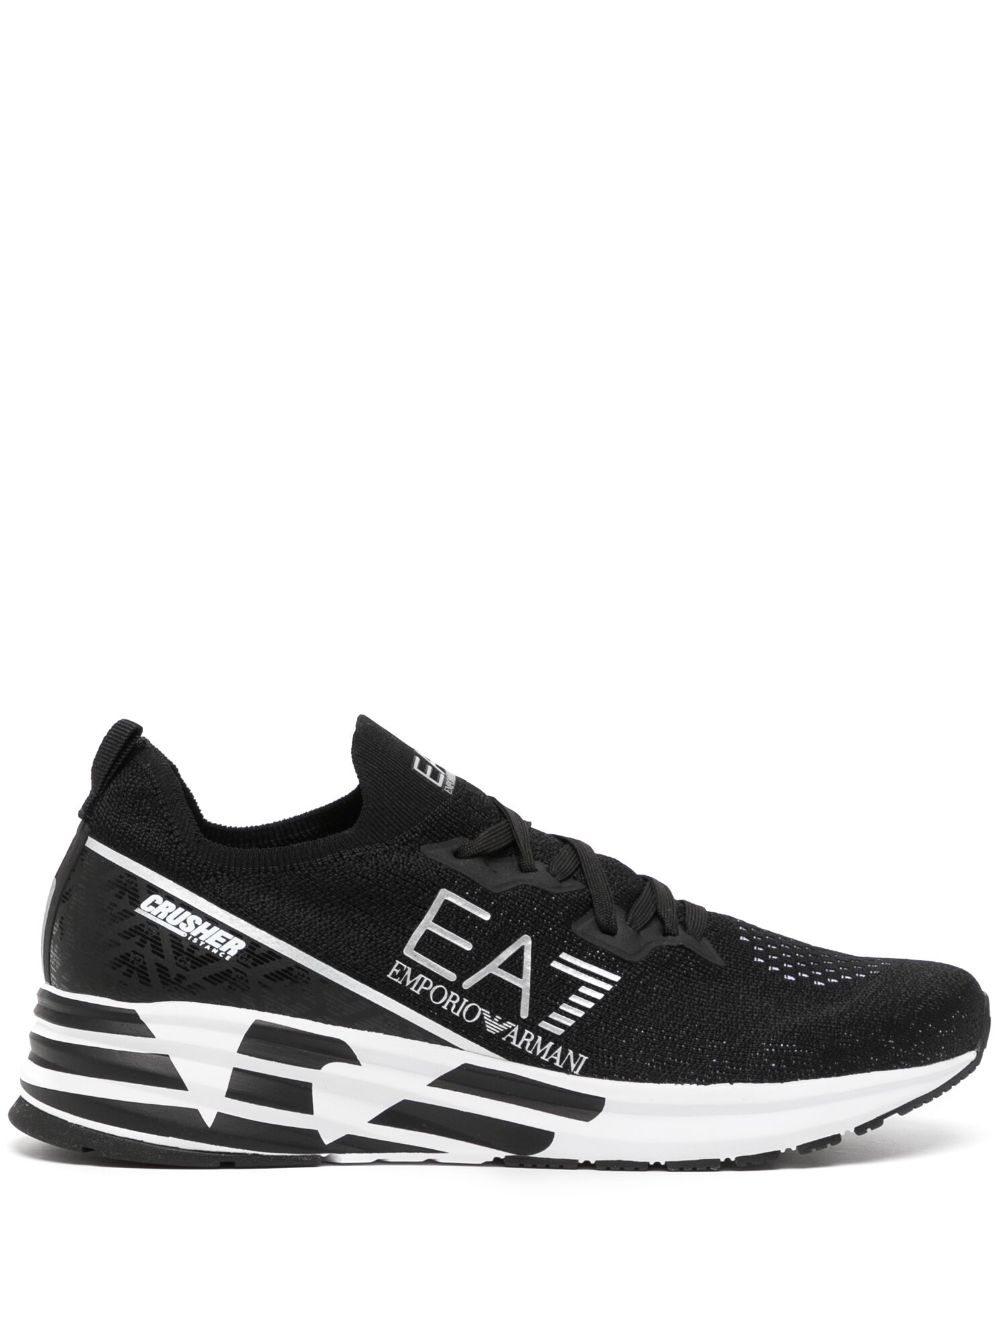 Ea7 Emporio Armani Crusher Distance low-top sneakers - Black von Ea7 Emporio Armani